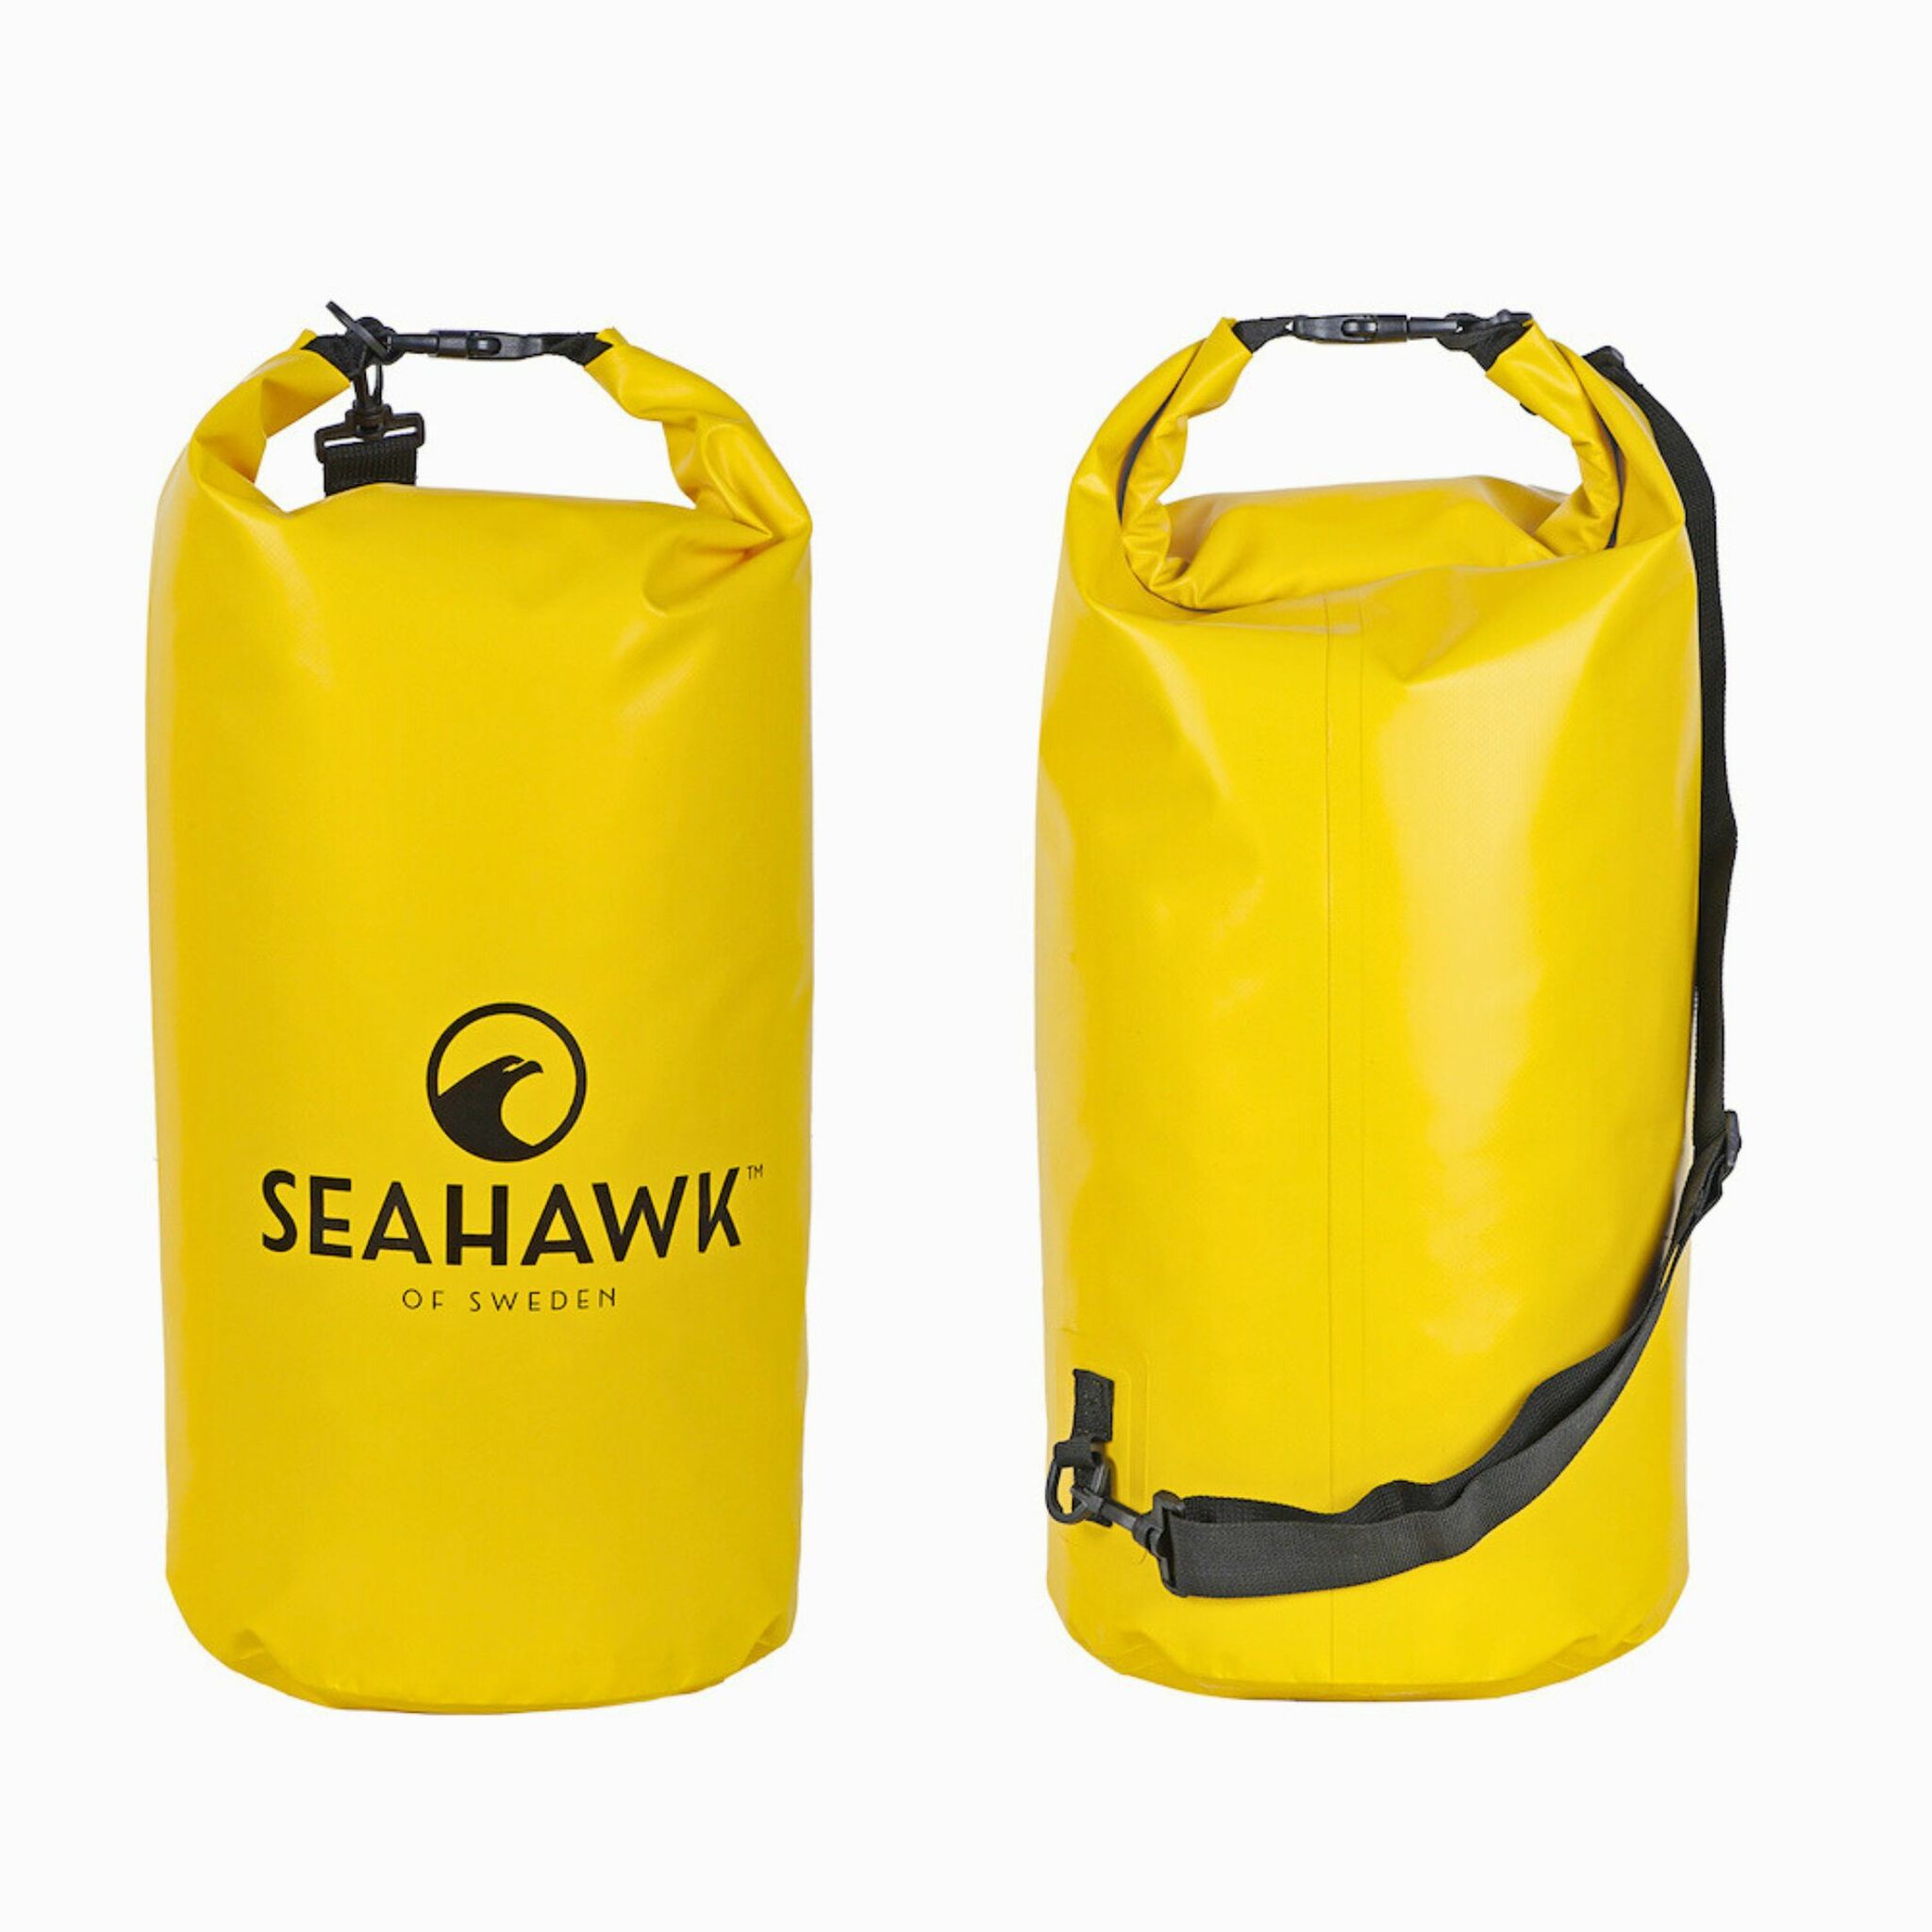 Seahawk Drybag set - 5-10-20 liter